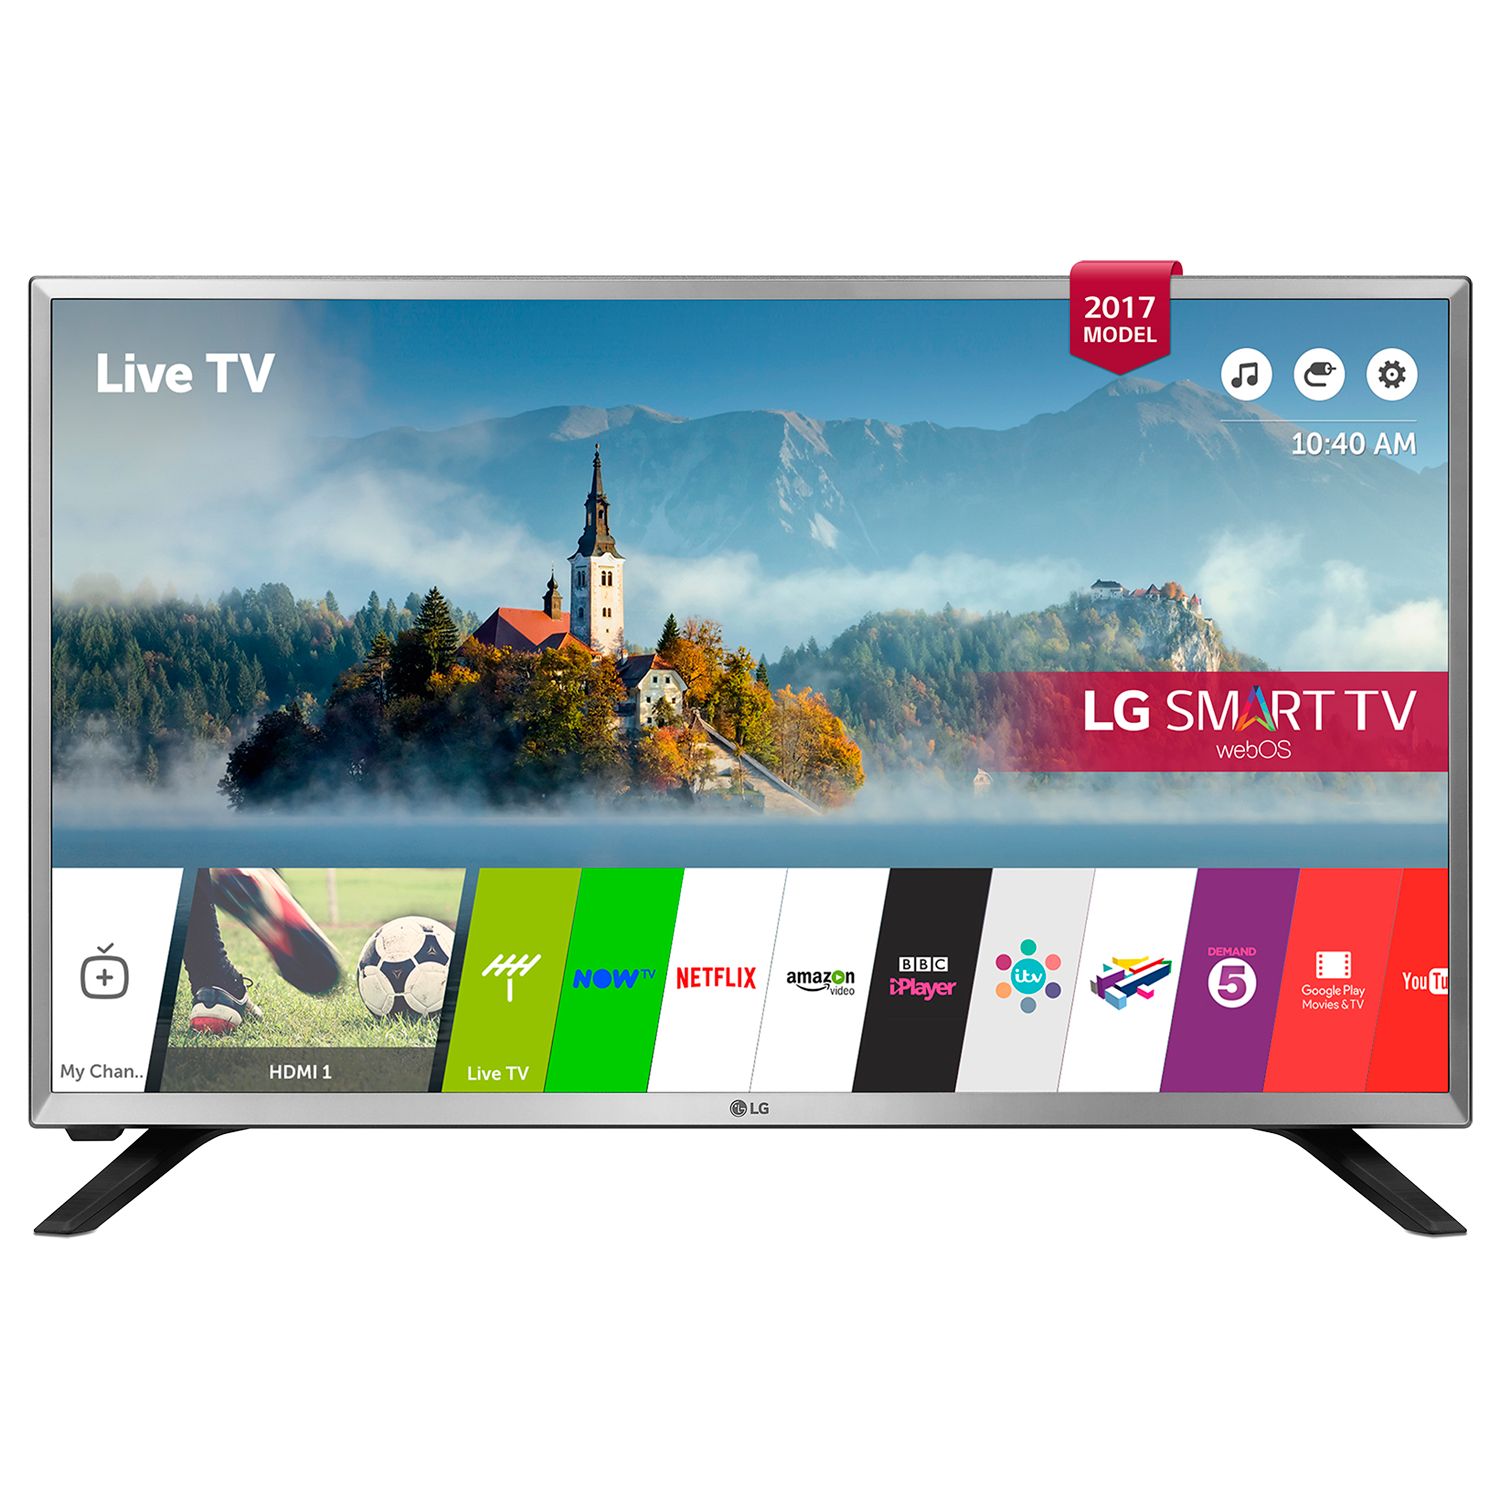 LG 32LJ590U LED HD Ready 720p Smart TV, 32" with Freesat HD & Freeview Play, Silver